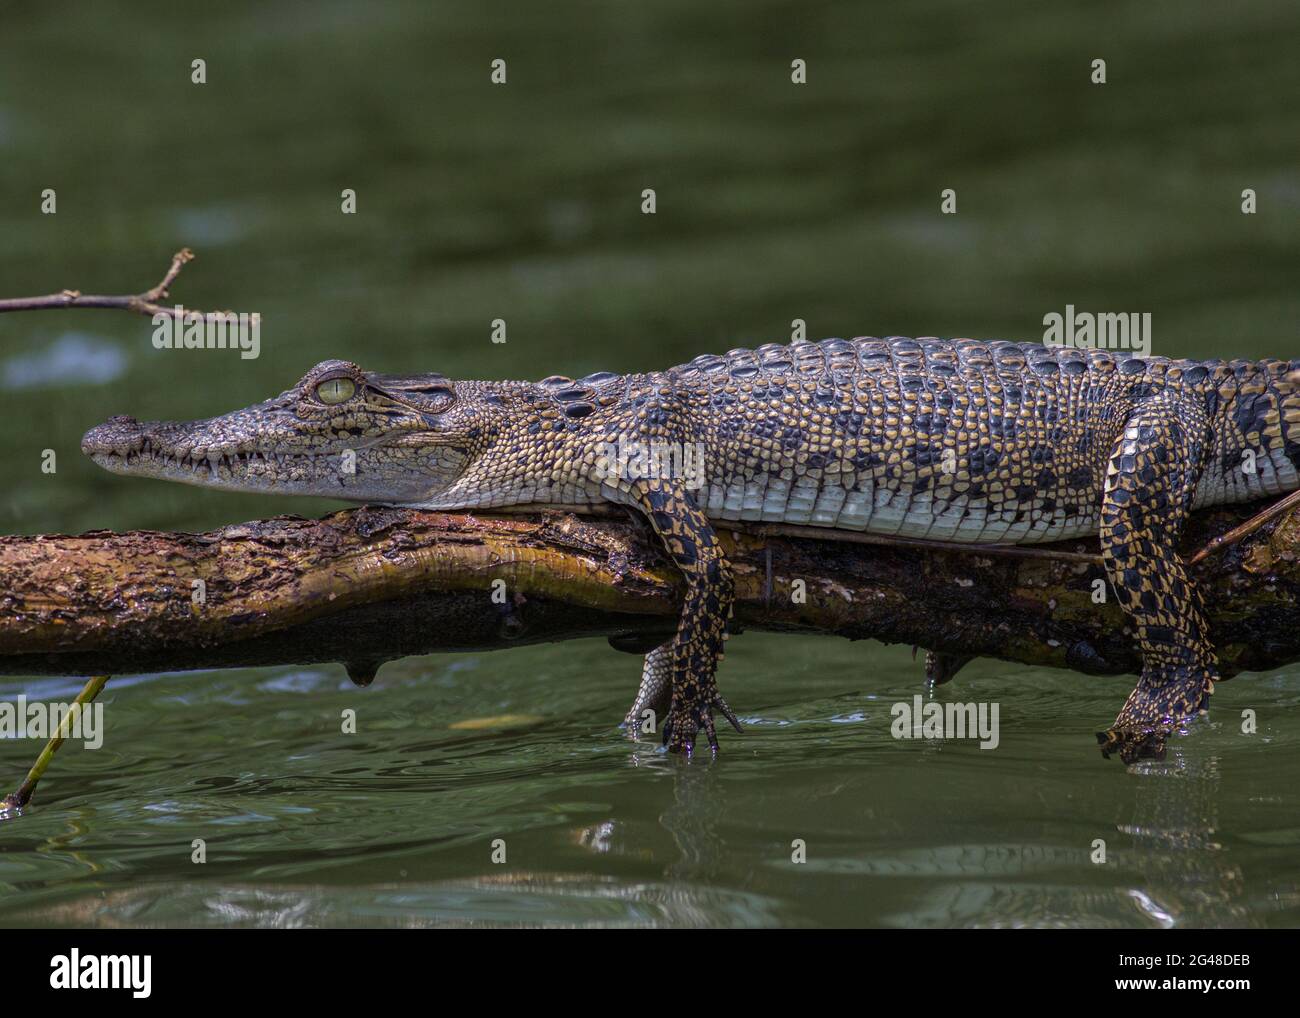 Basking croc; Close up of a crocodile; crocodile jaws; Crocodile with its mouth open basking in the sun; Saltwater crocodile, Nilwala river Sri Lanka Stock Photo